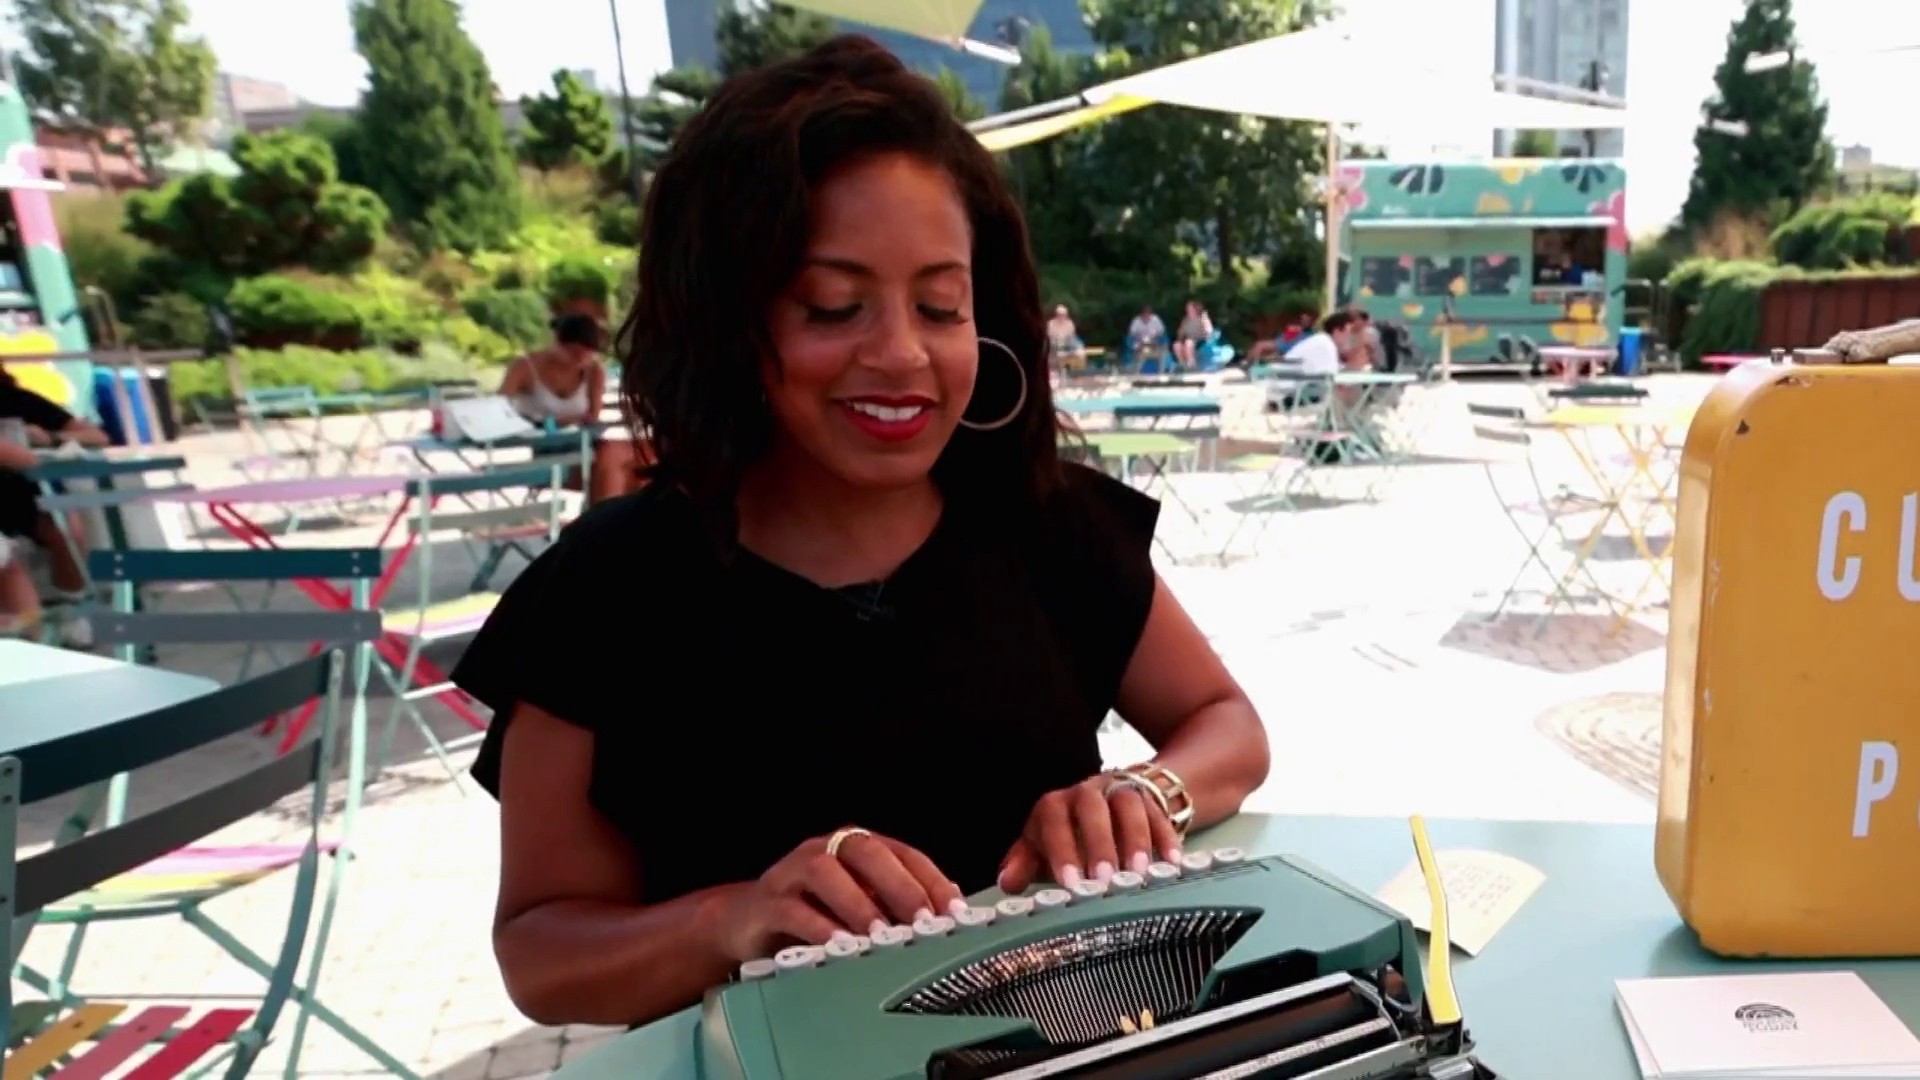 Sheinelle Jones tries her hand at typewriter poetry